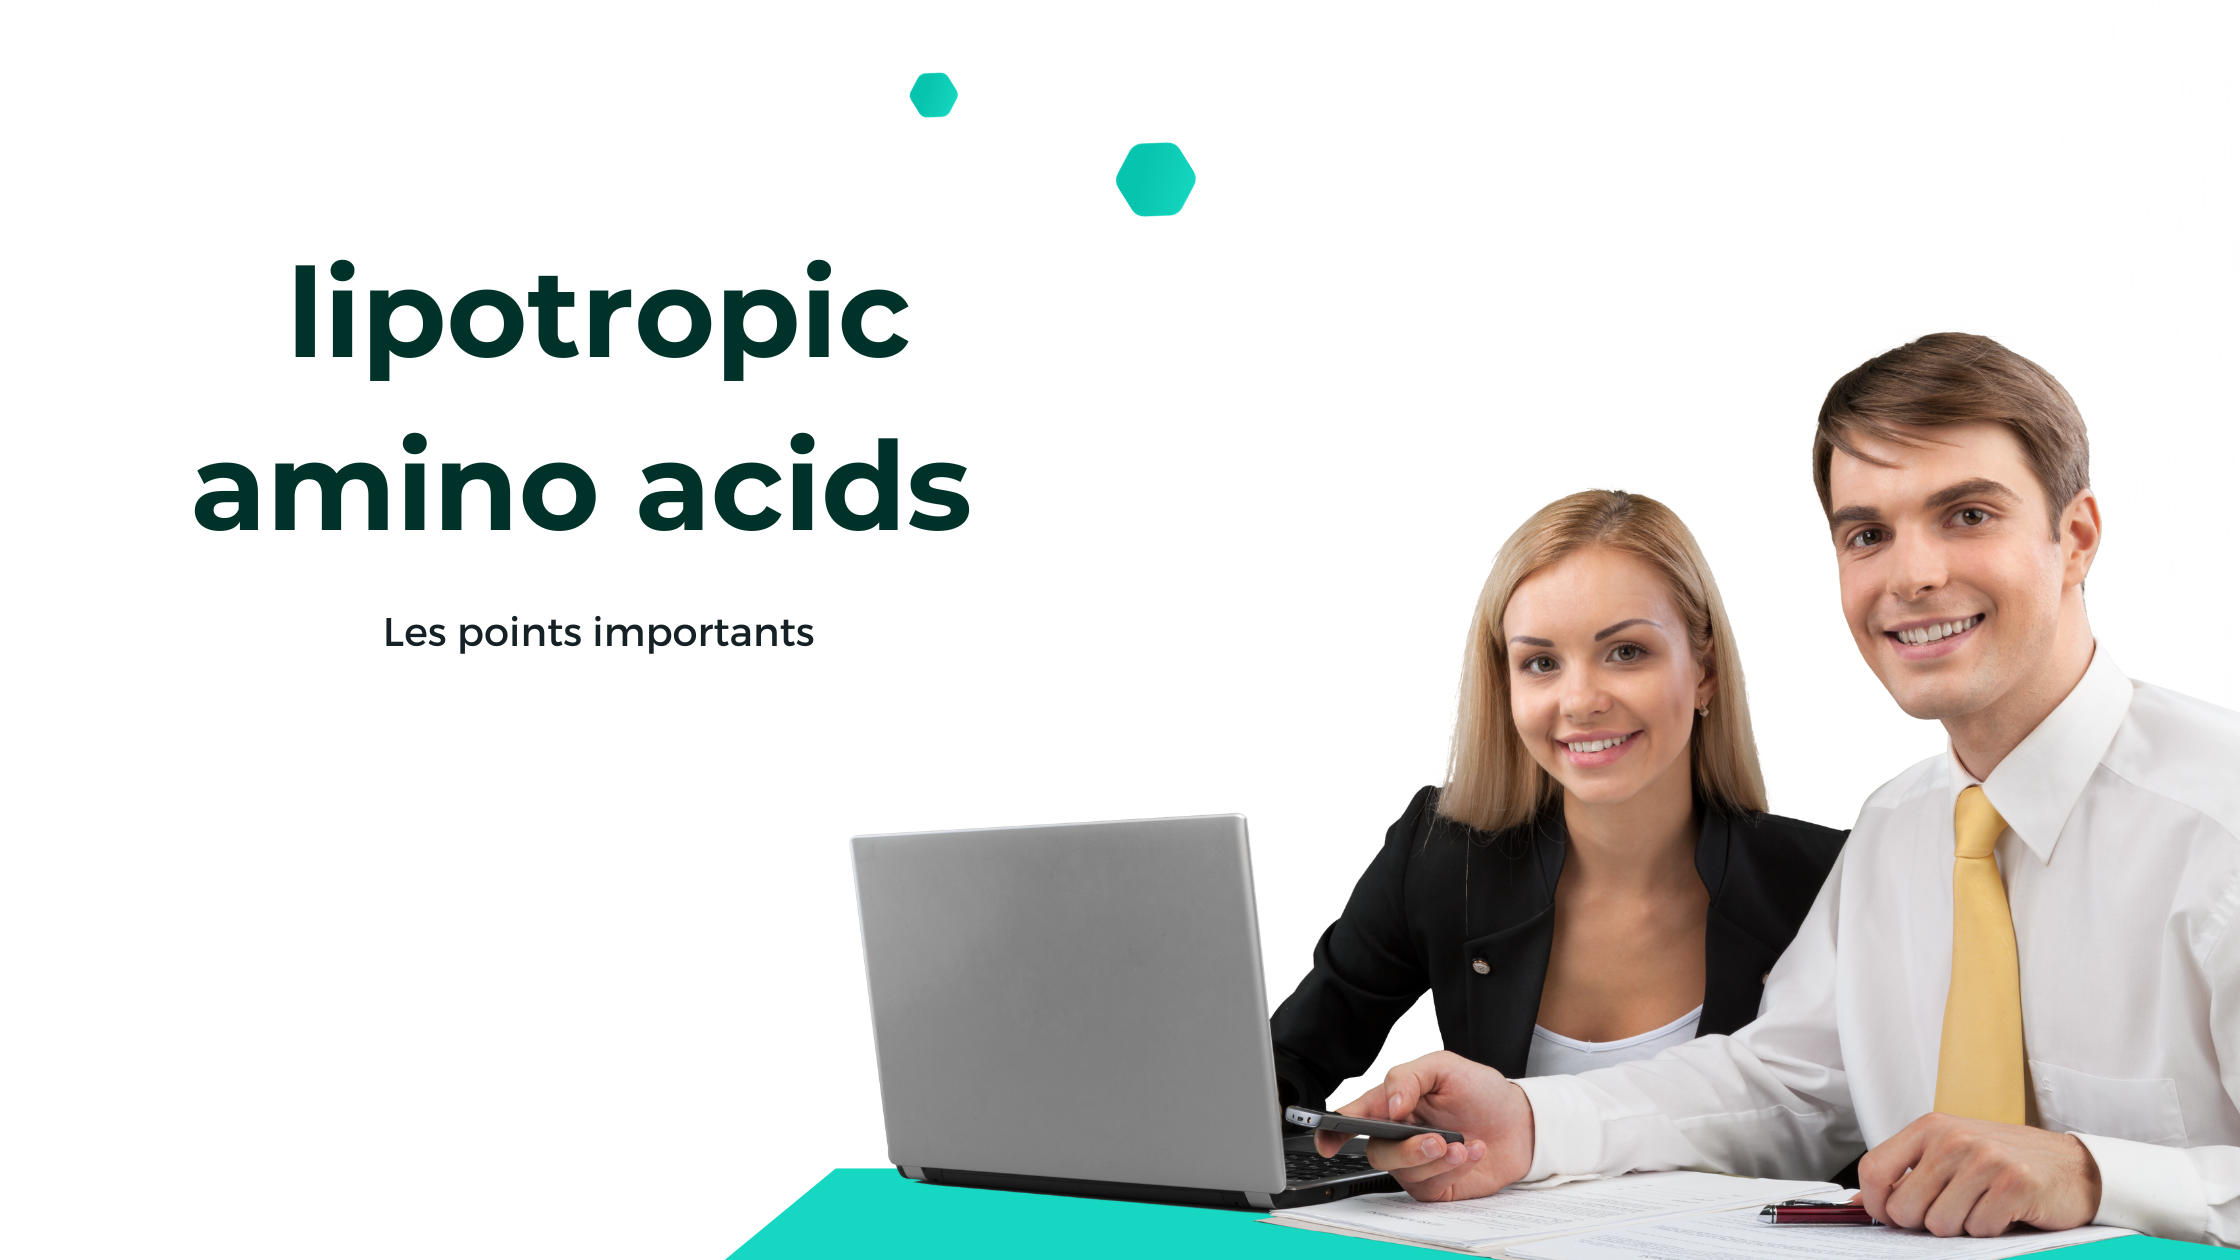 lipotropic amino acids | Les points importants